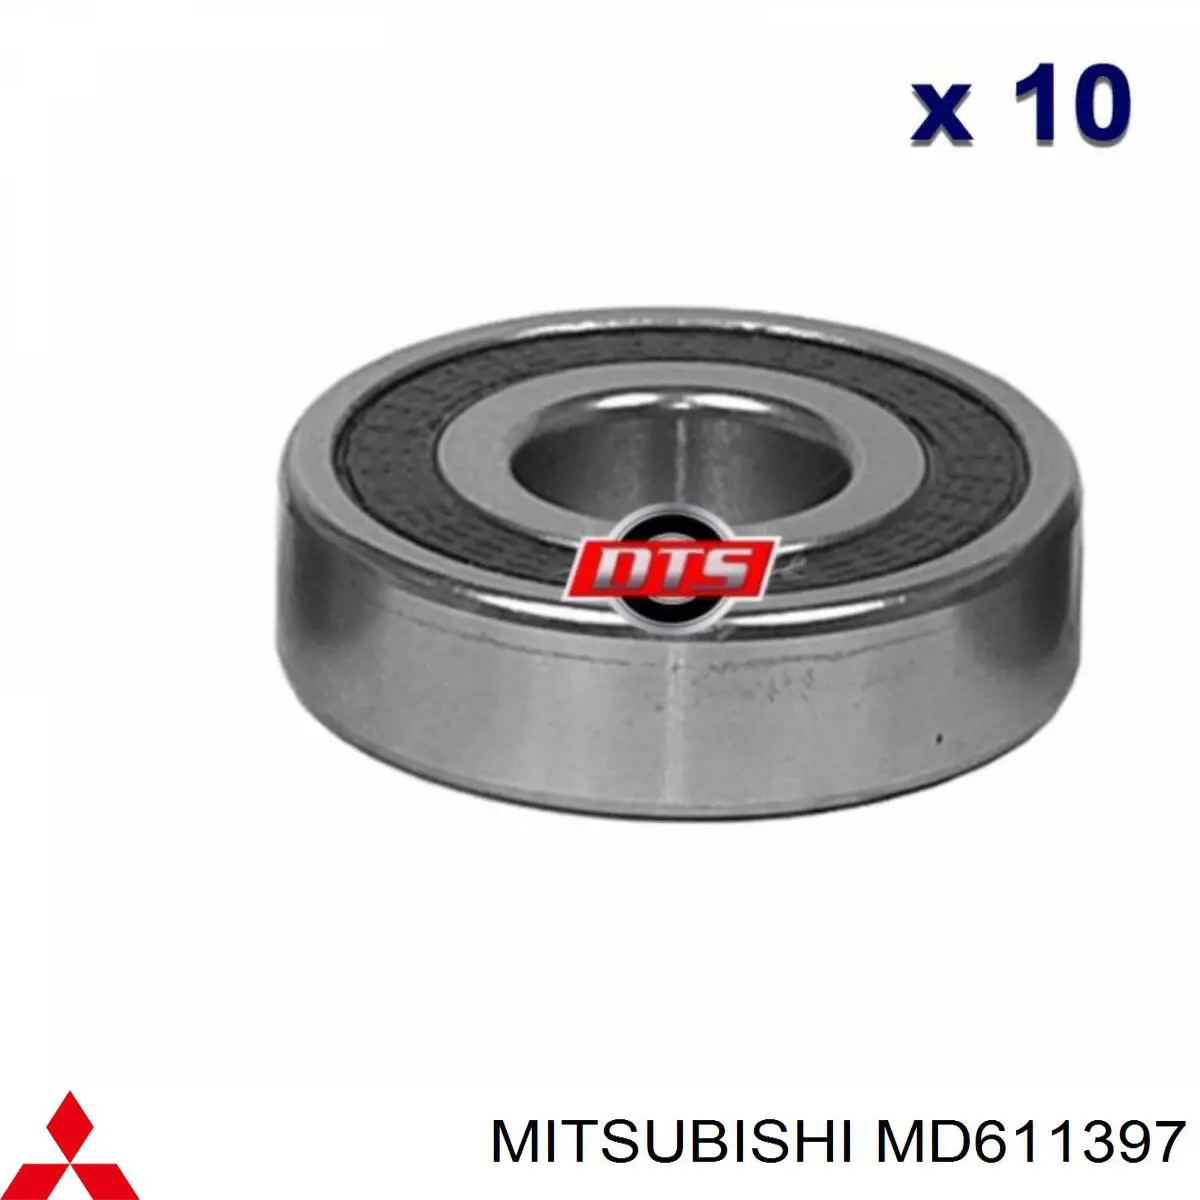 MD611397 Mitsubishi cojinete, alternador